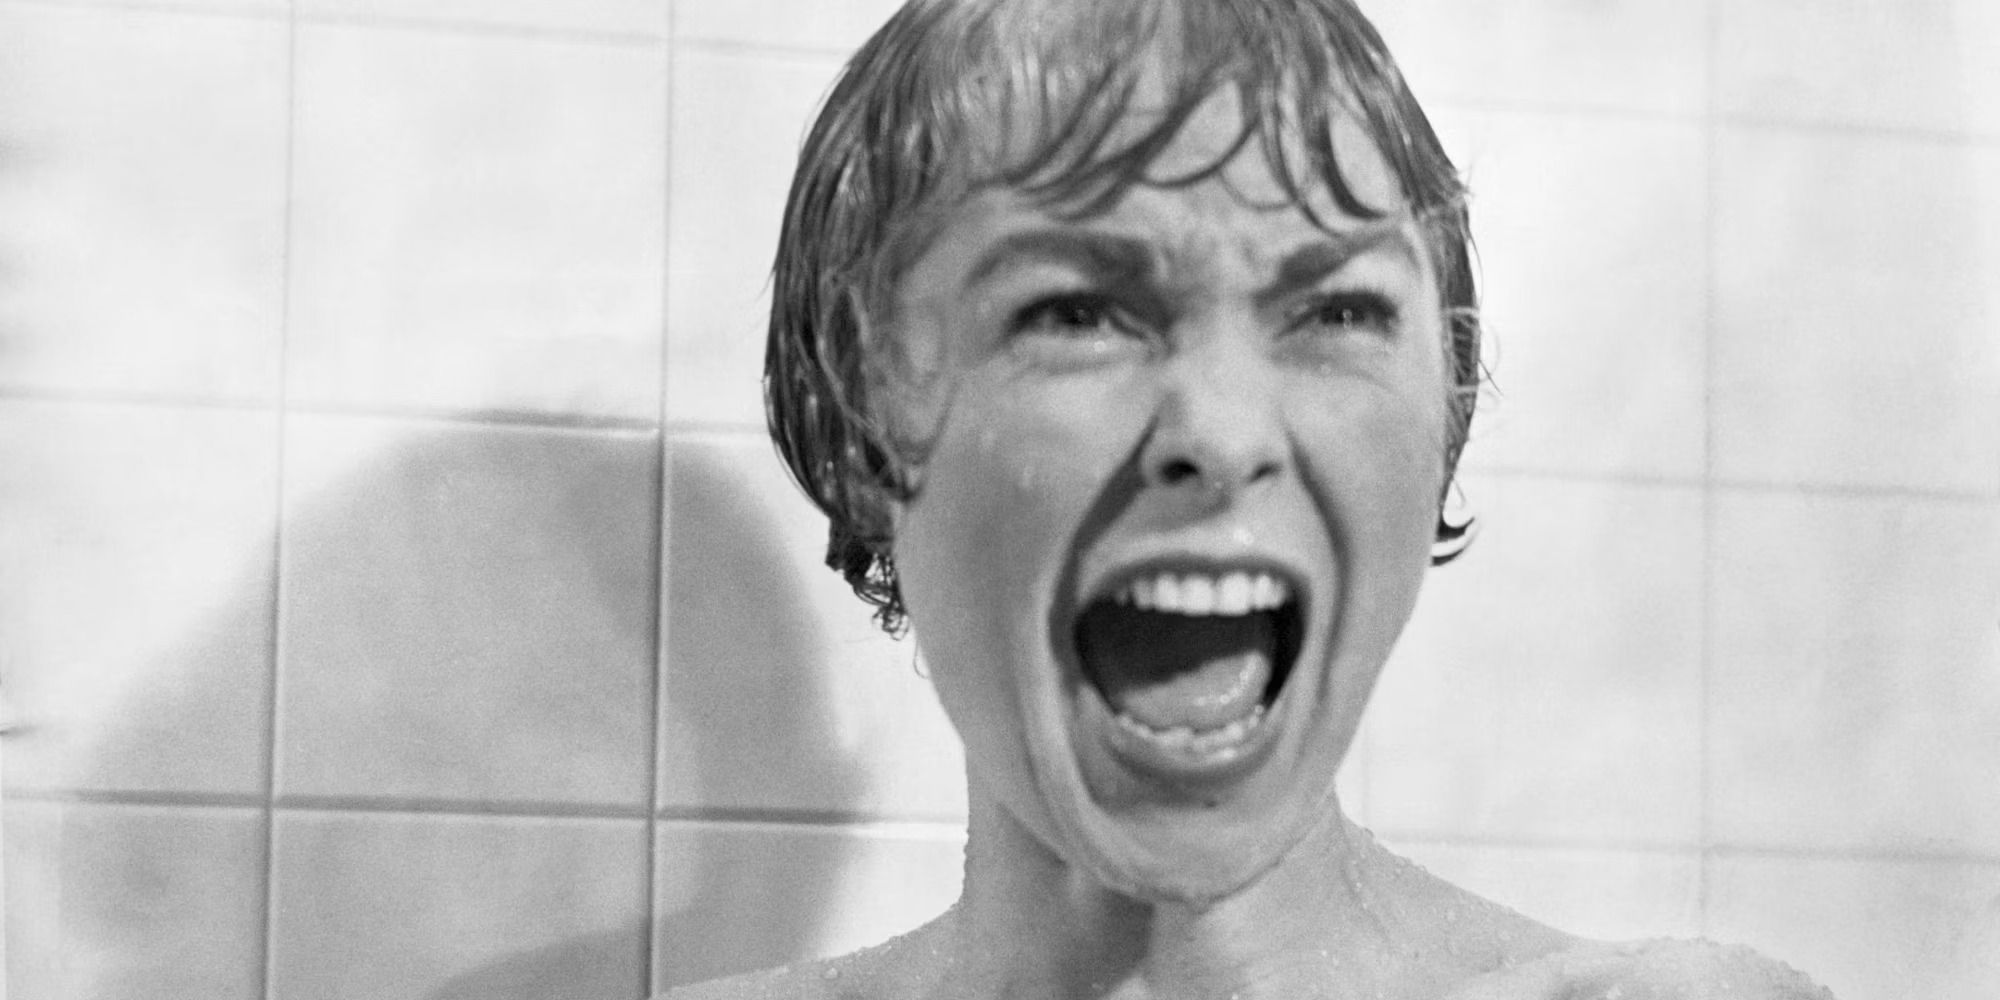 Marion Crane screams in the shower in 'Psycho'